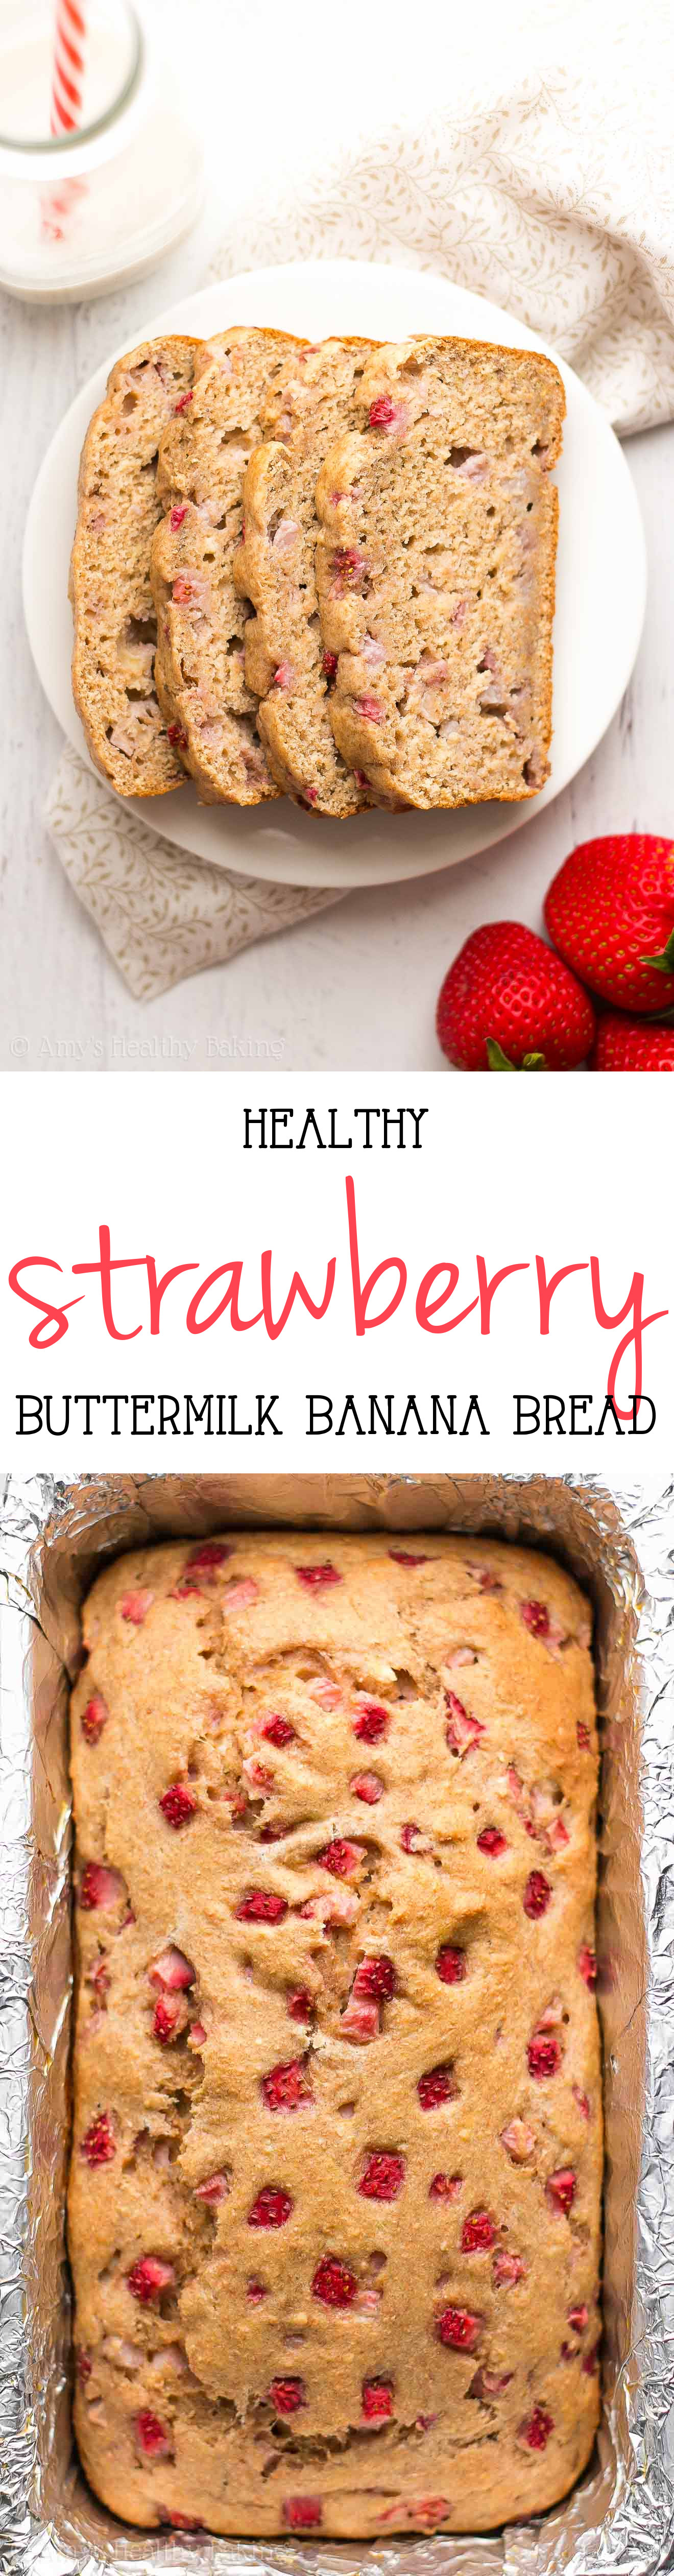 Healthy Strawberry Banana Bread
 Healthy Strawberry Buttermilk Banana Bread